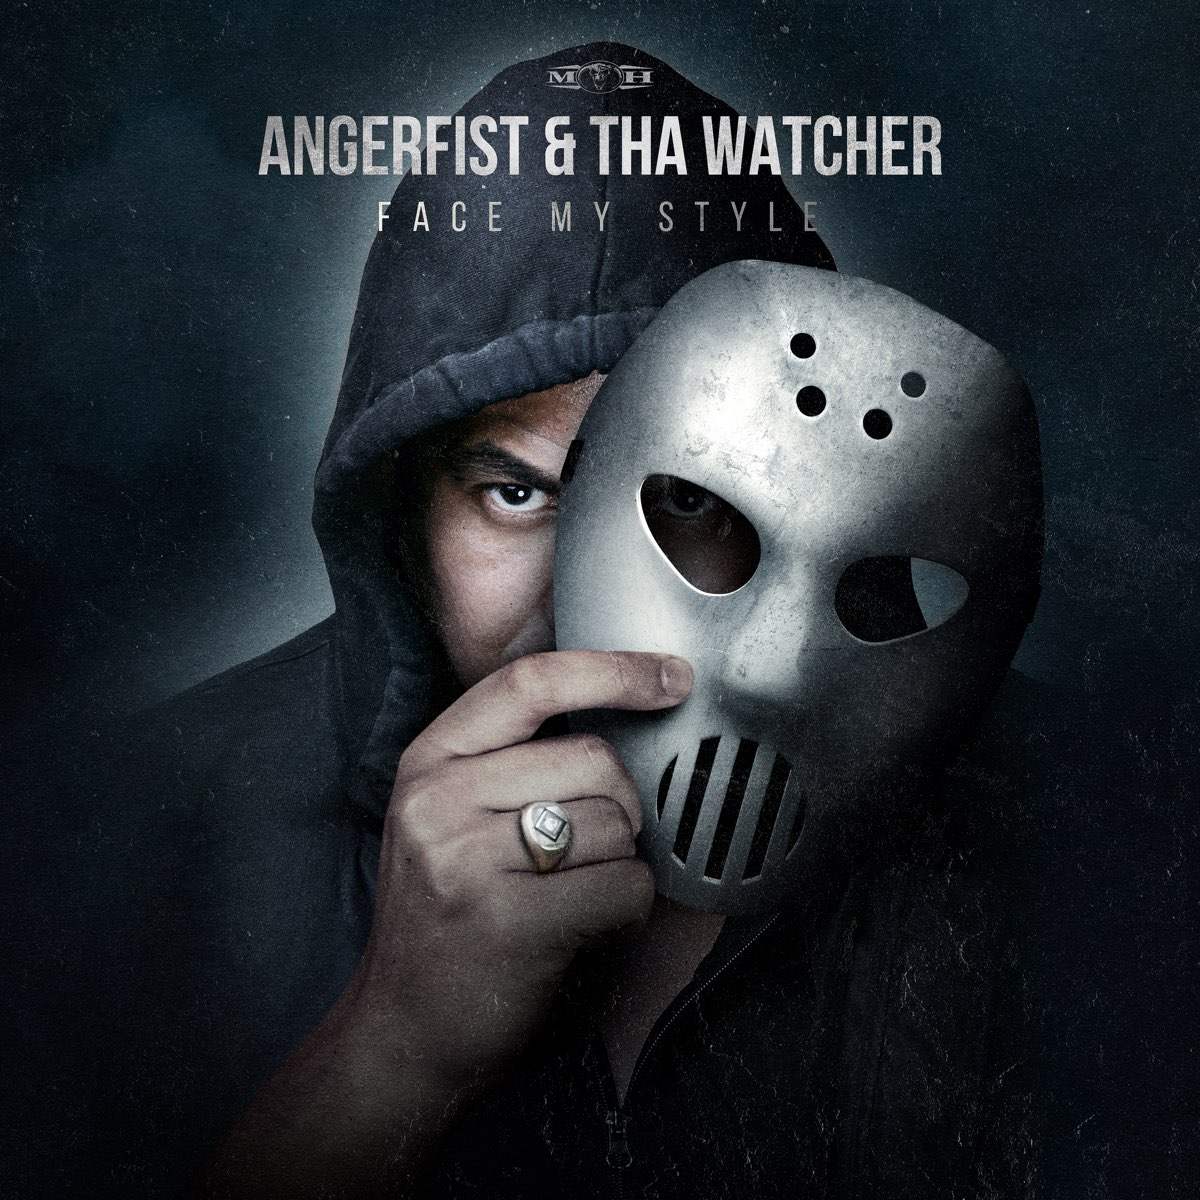 Face My Style - Single di Angerfist & Tha Watcher su Apple Music